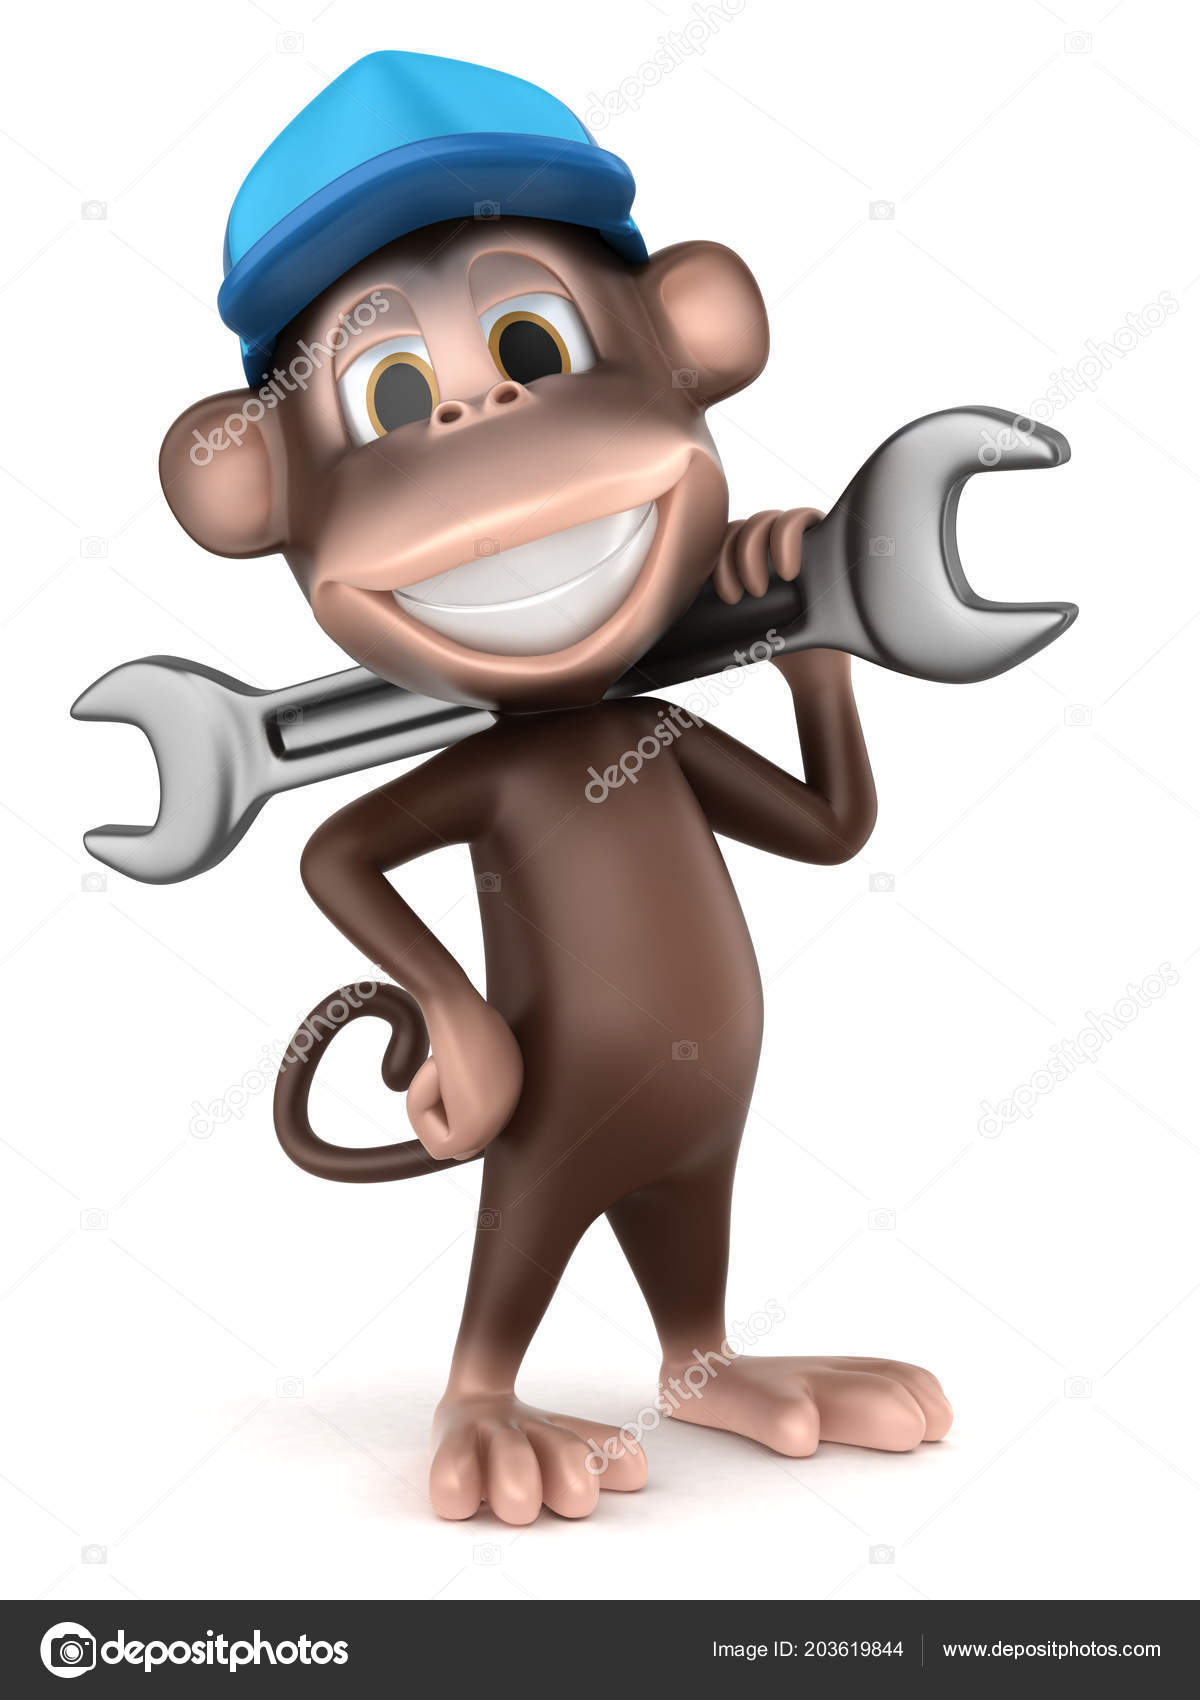 https://st4.depositphotos.com/3842881/20361/i/1600/depositphotos_203619844-stock-illustration-render-mechanic-monkey-big-wrench.jpg